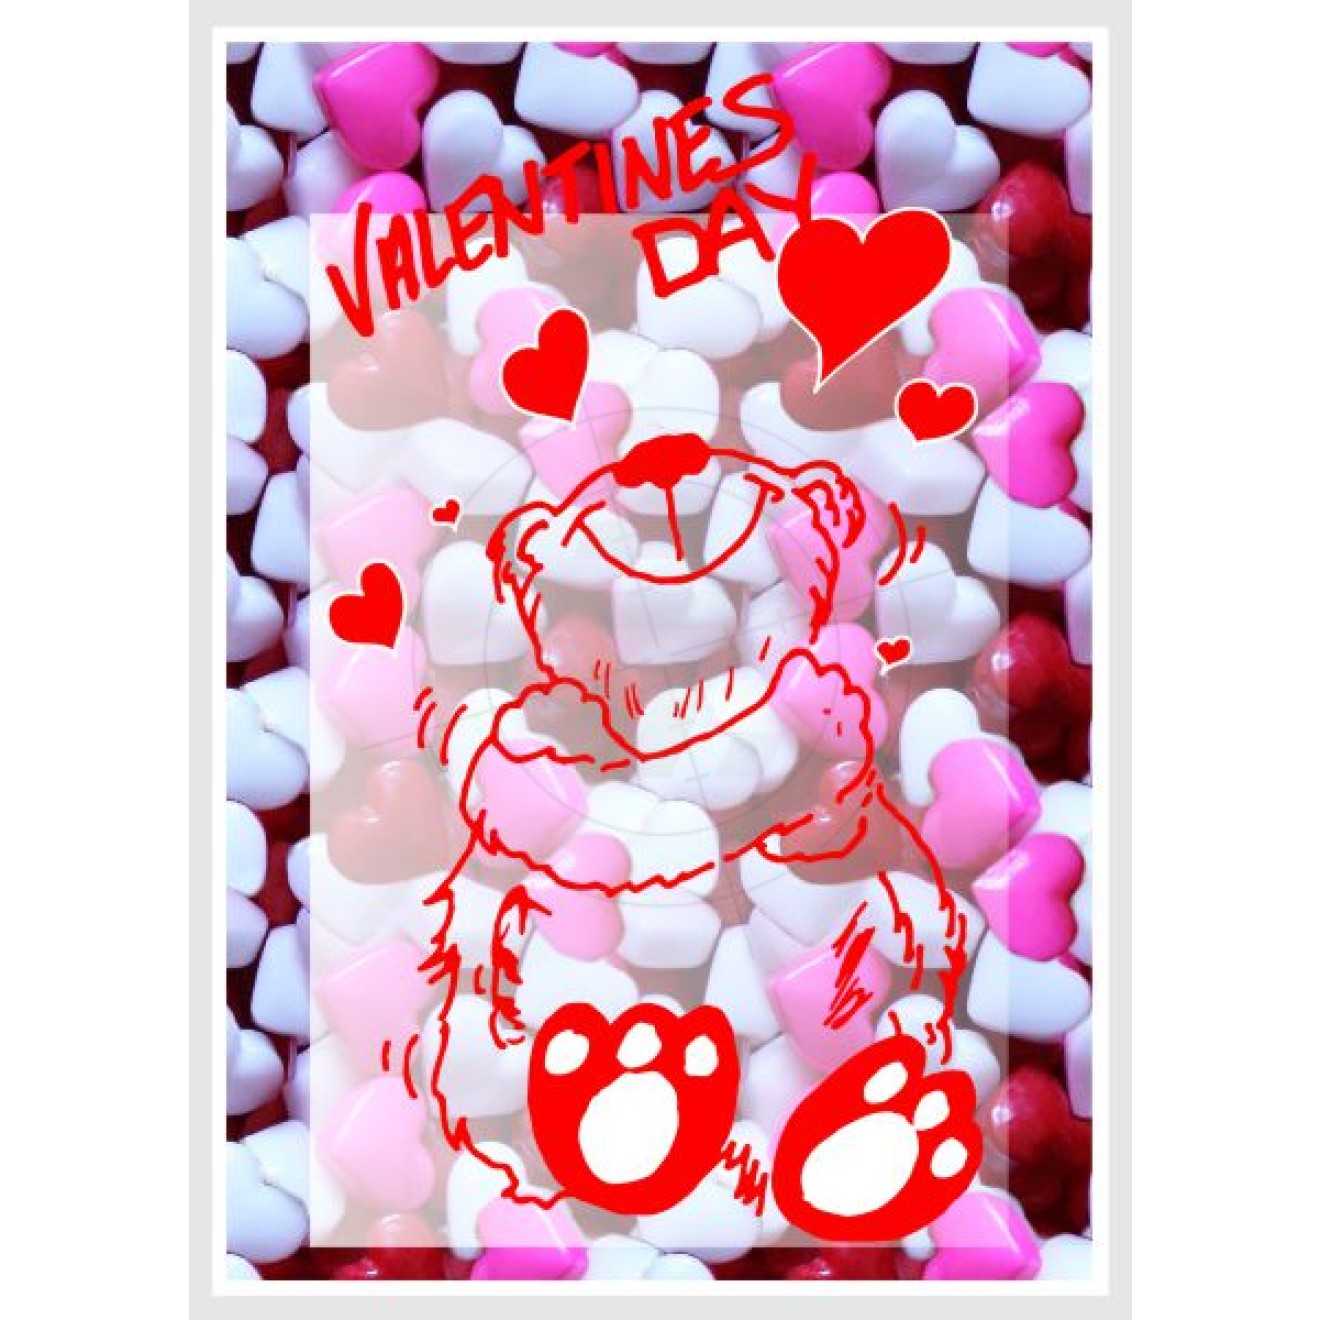 Poster Valentine's Day